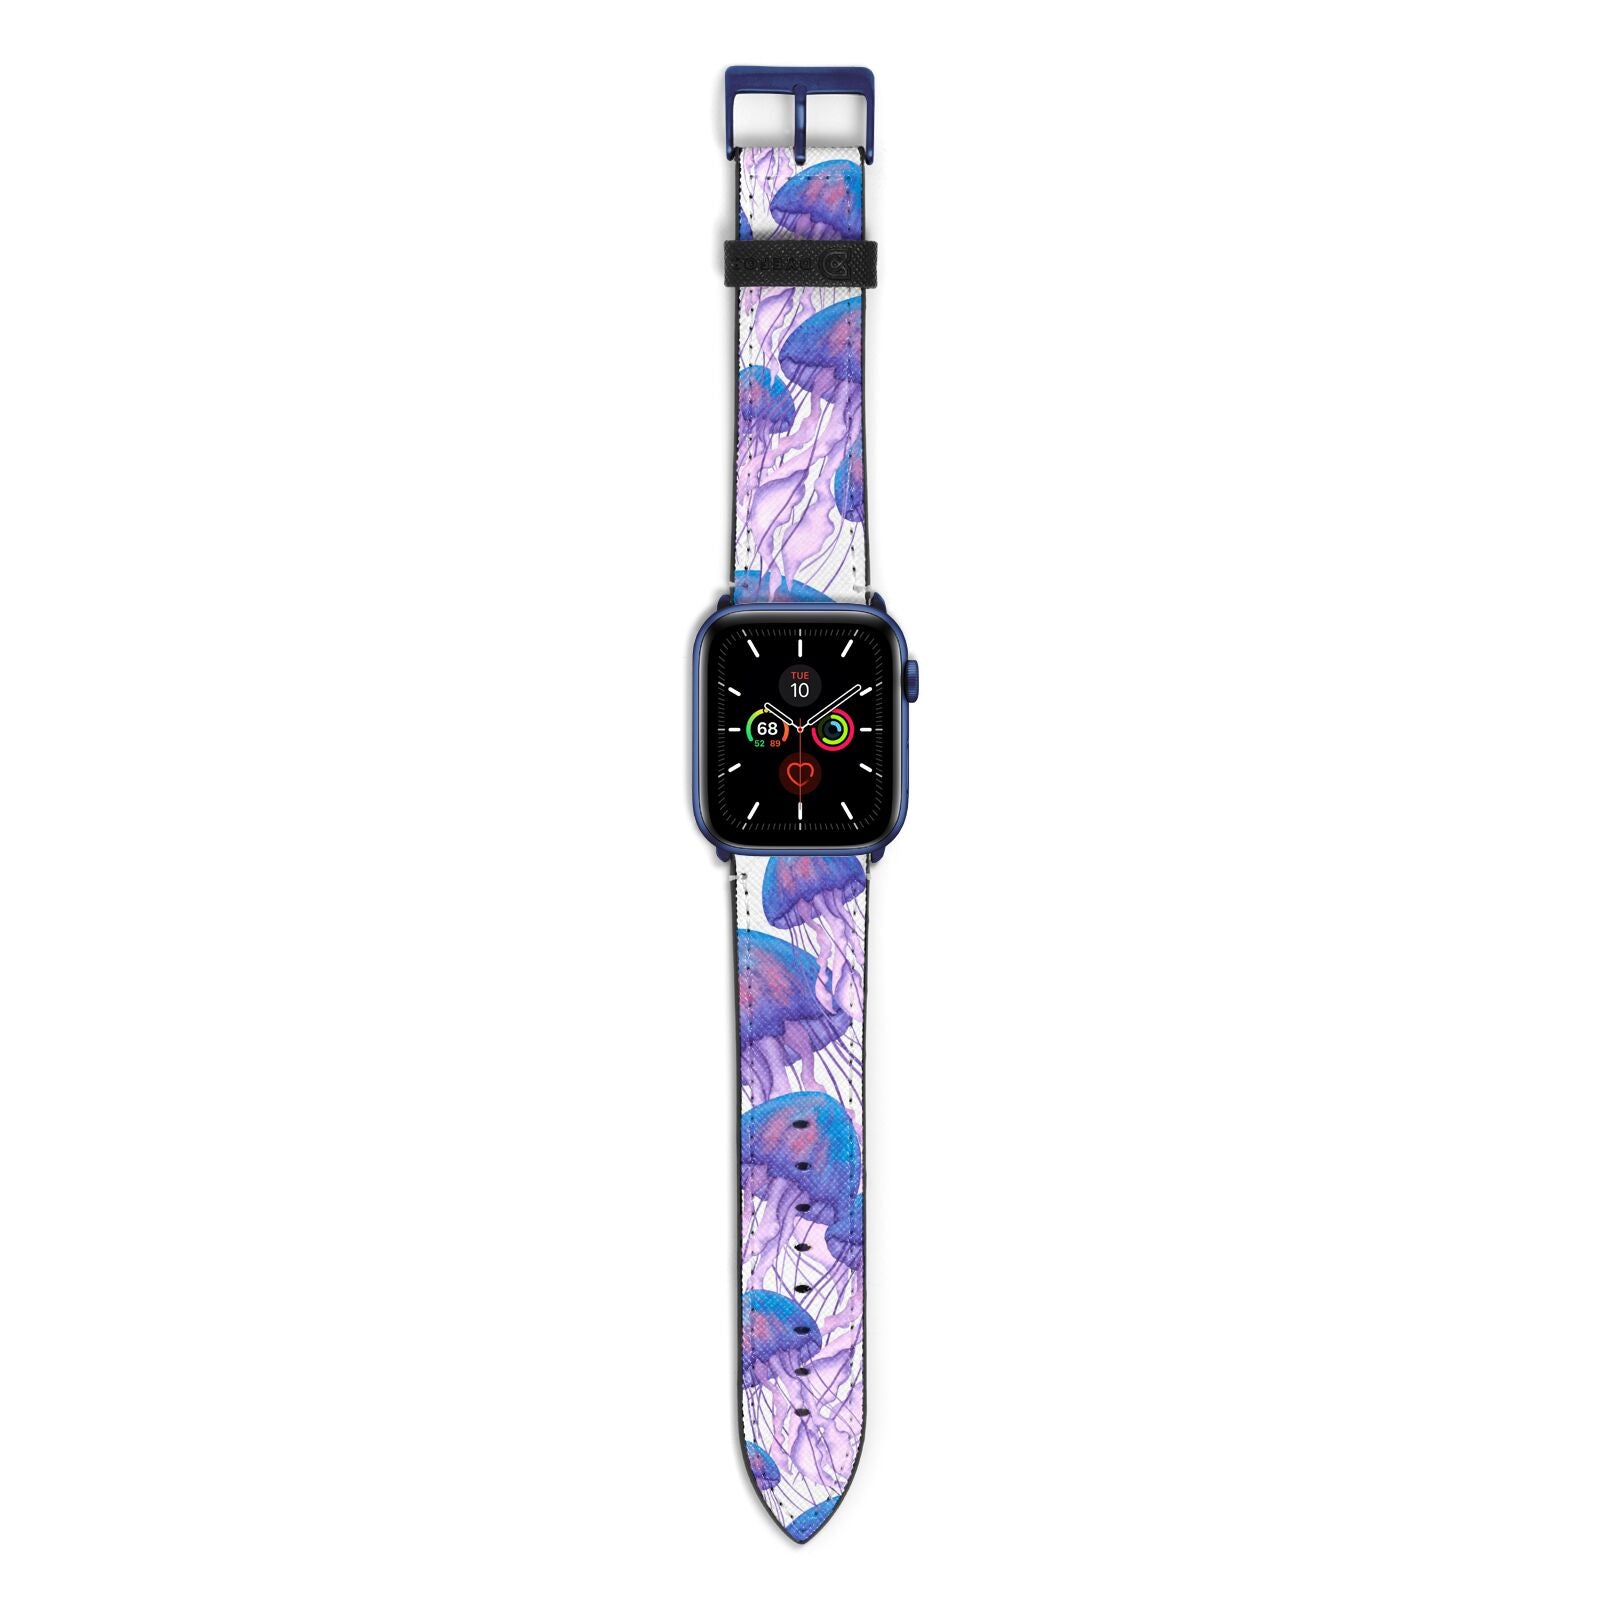 Jellyfish Apple Watch Strap with Blue Hardware